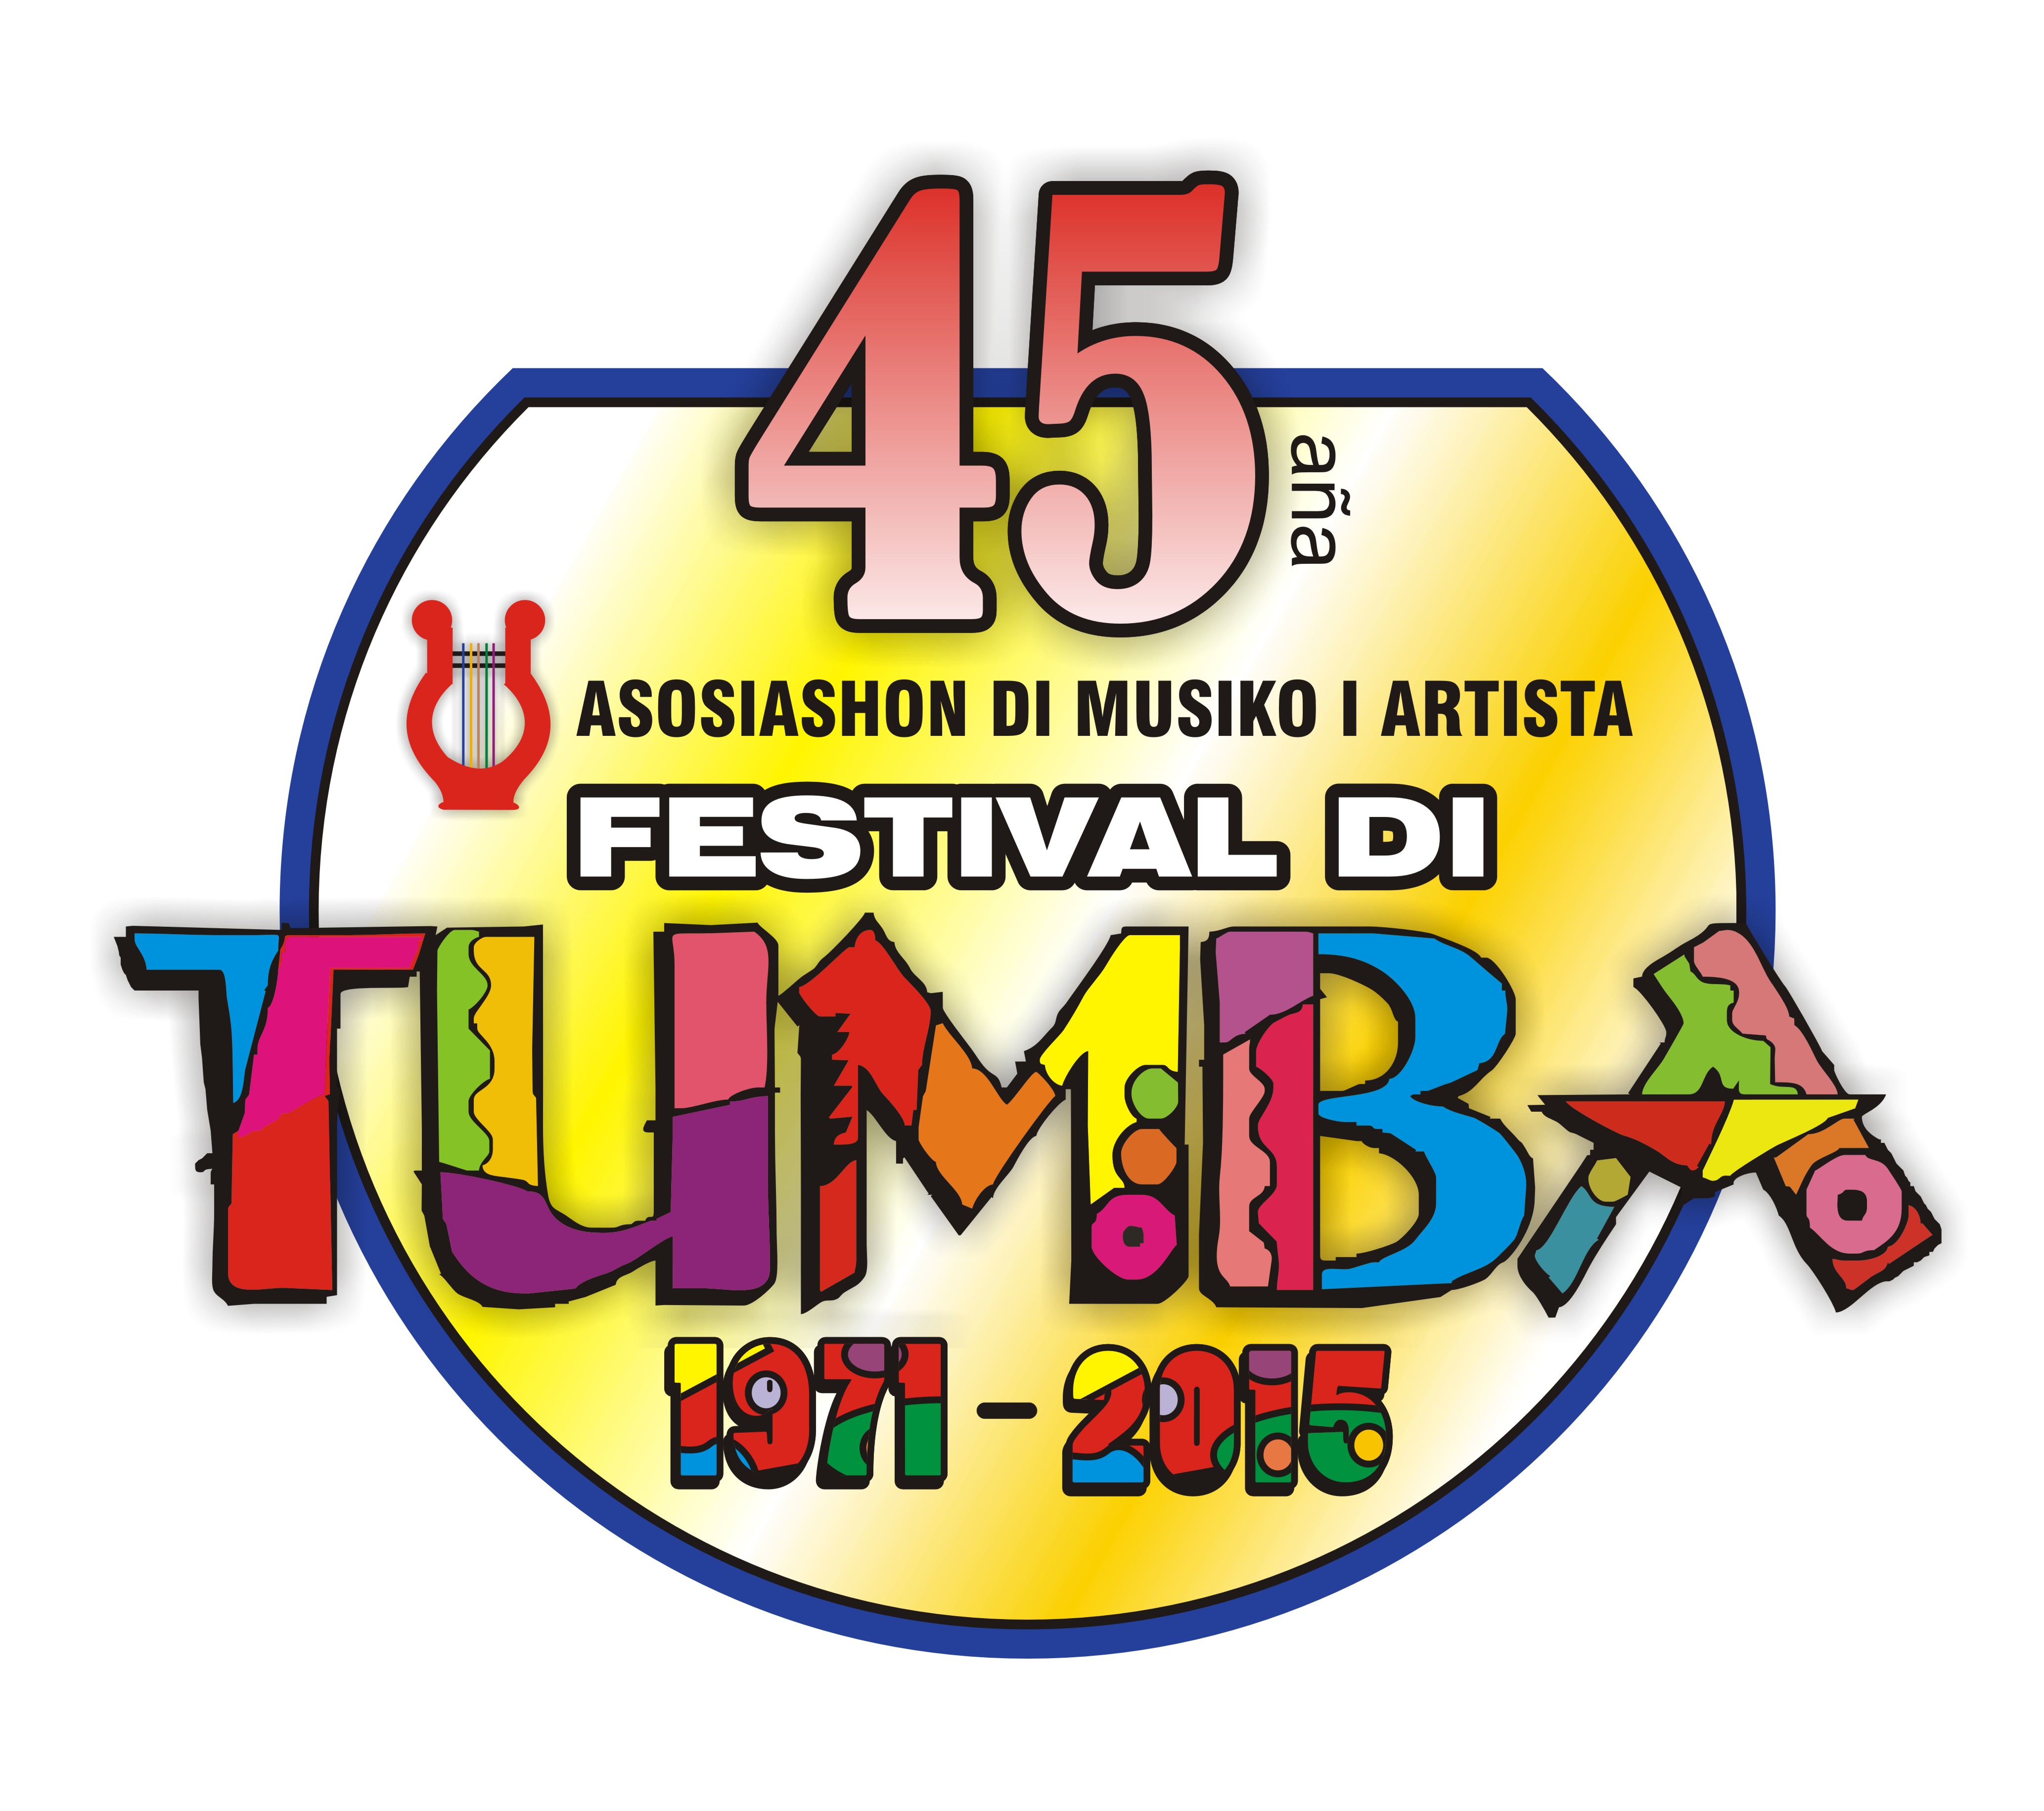 REUNION GENERAL EKSTRA ORDINARIO  RIBA FESTIVAL DI TUMBA 2015